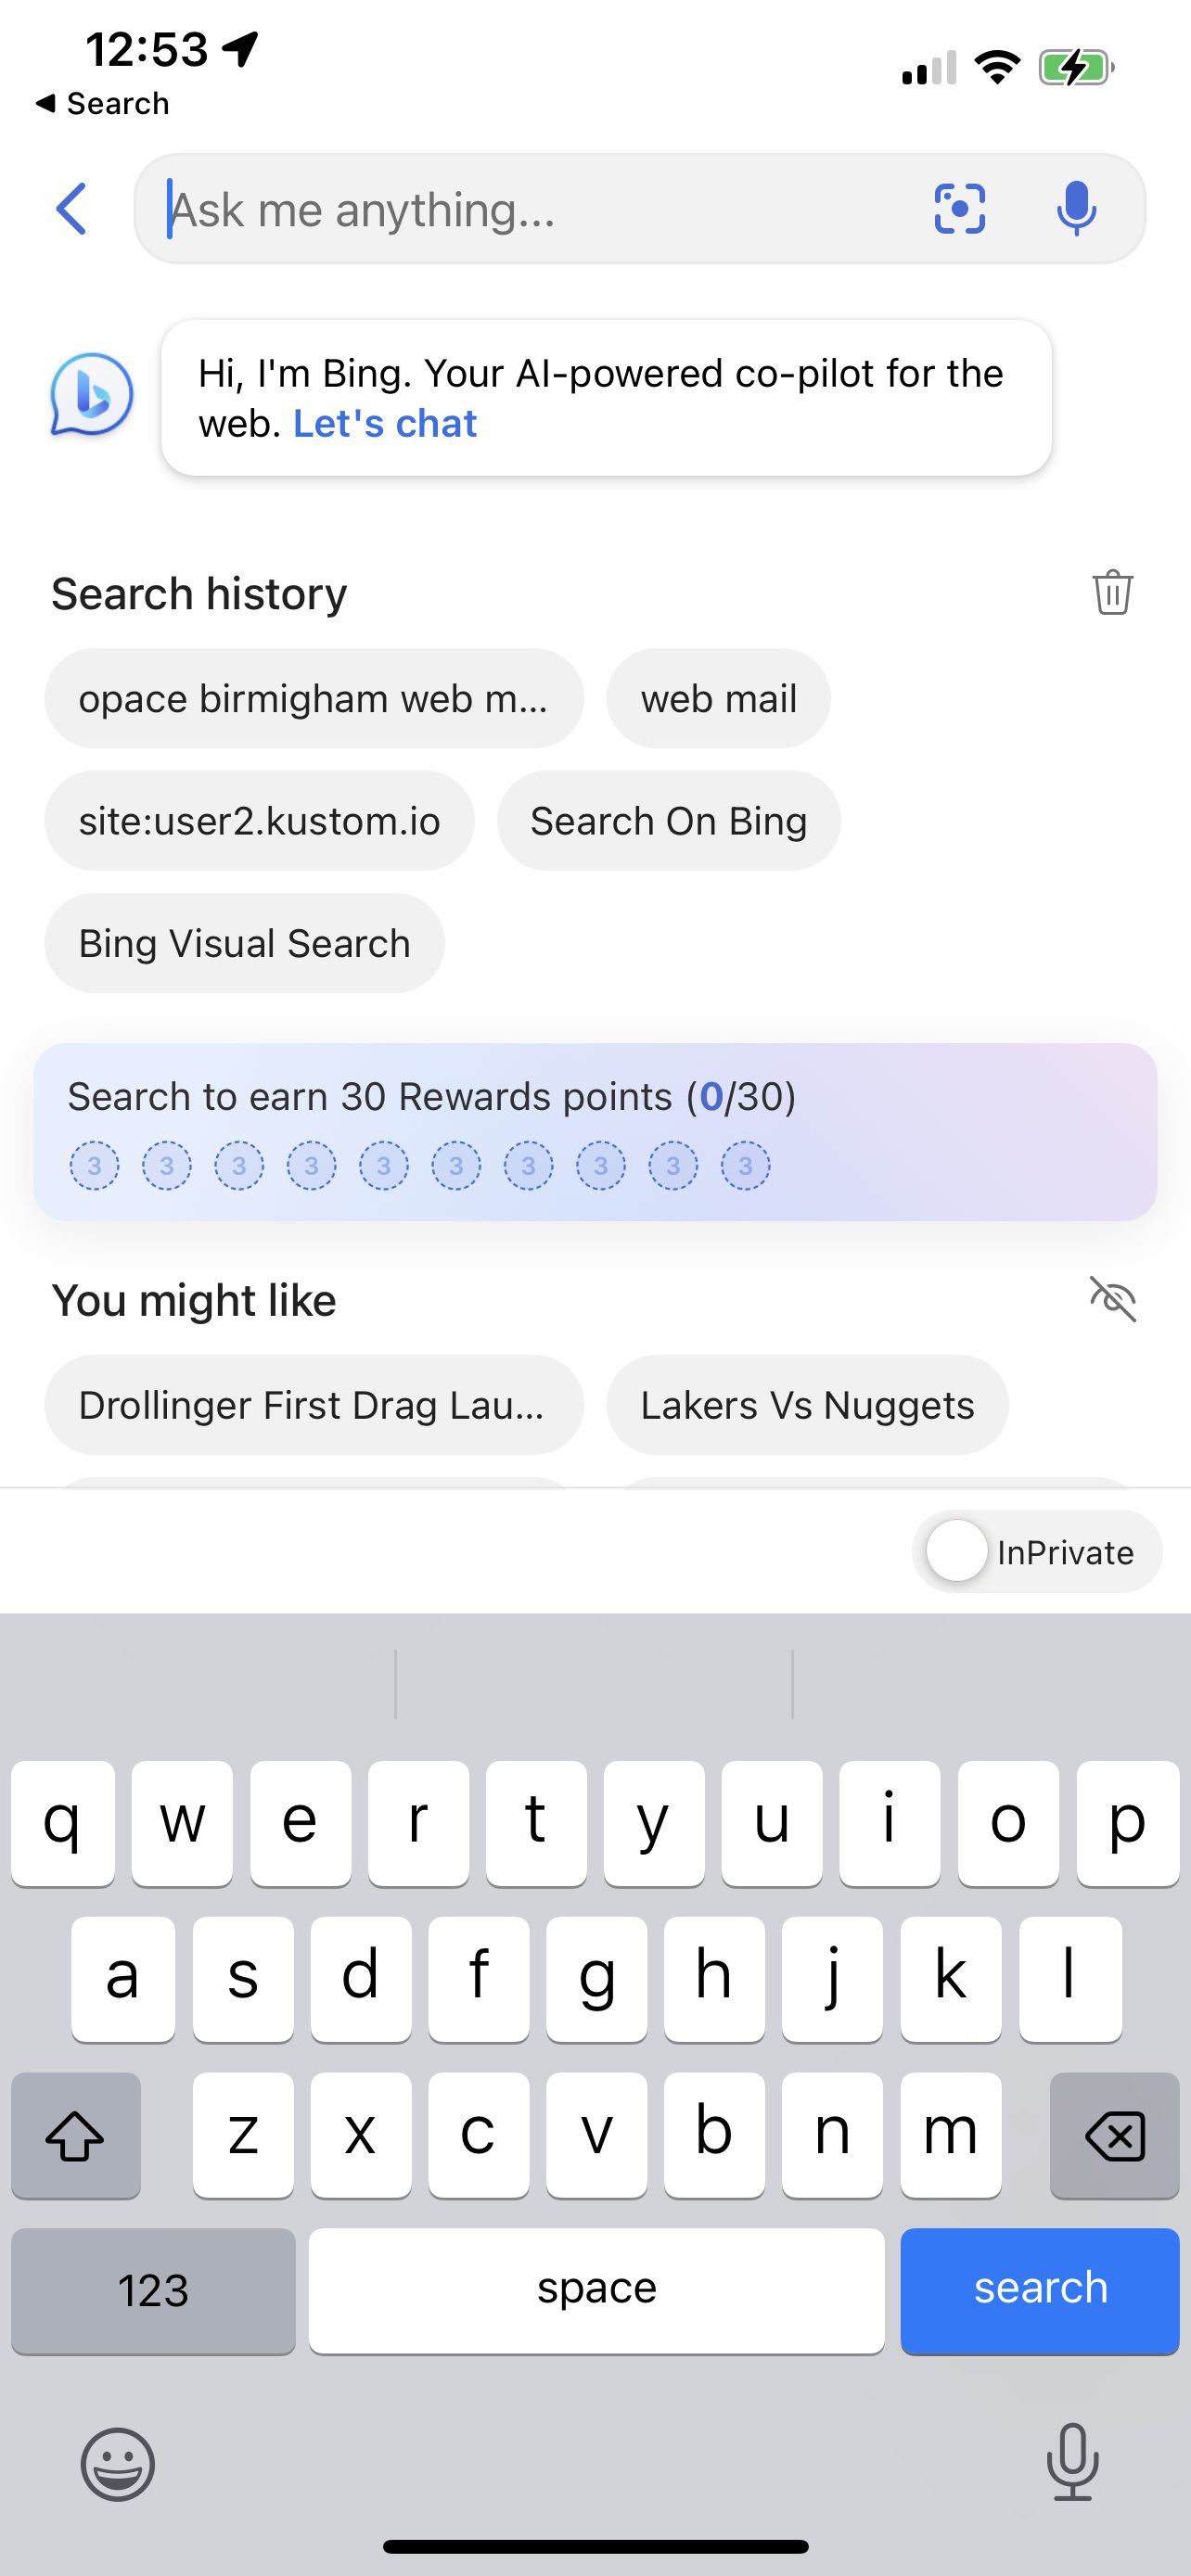 Bing AI search engine